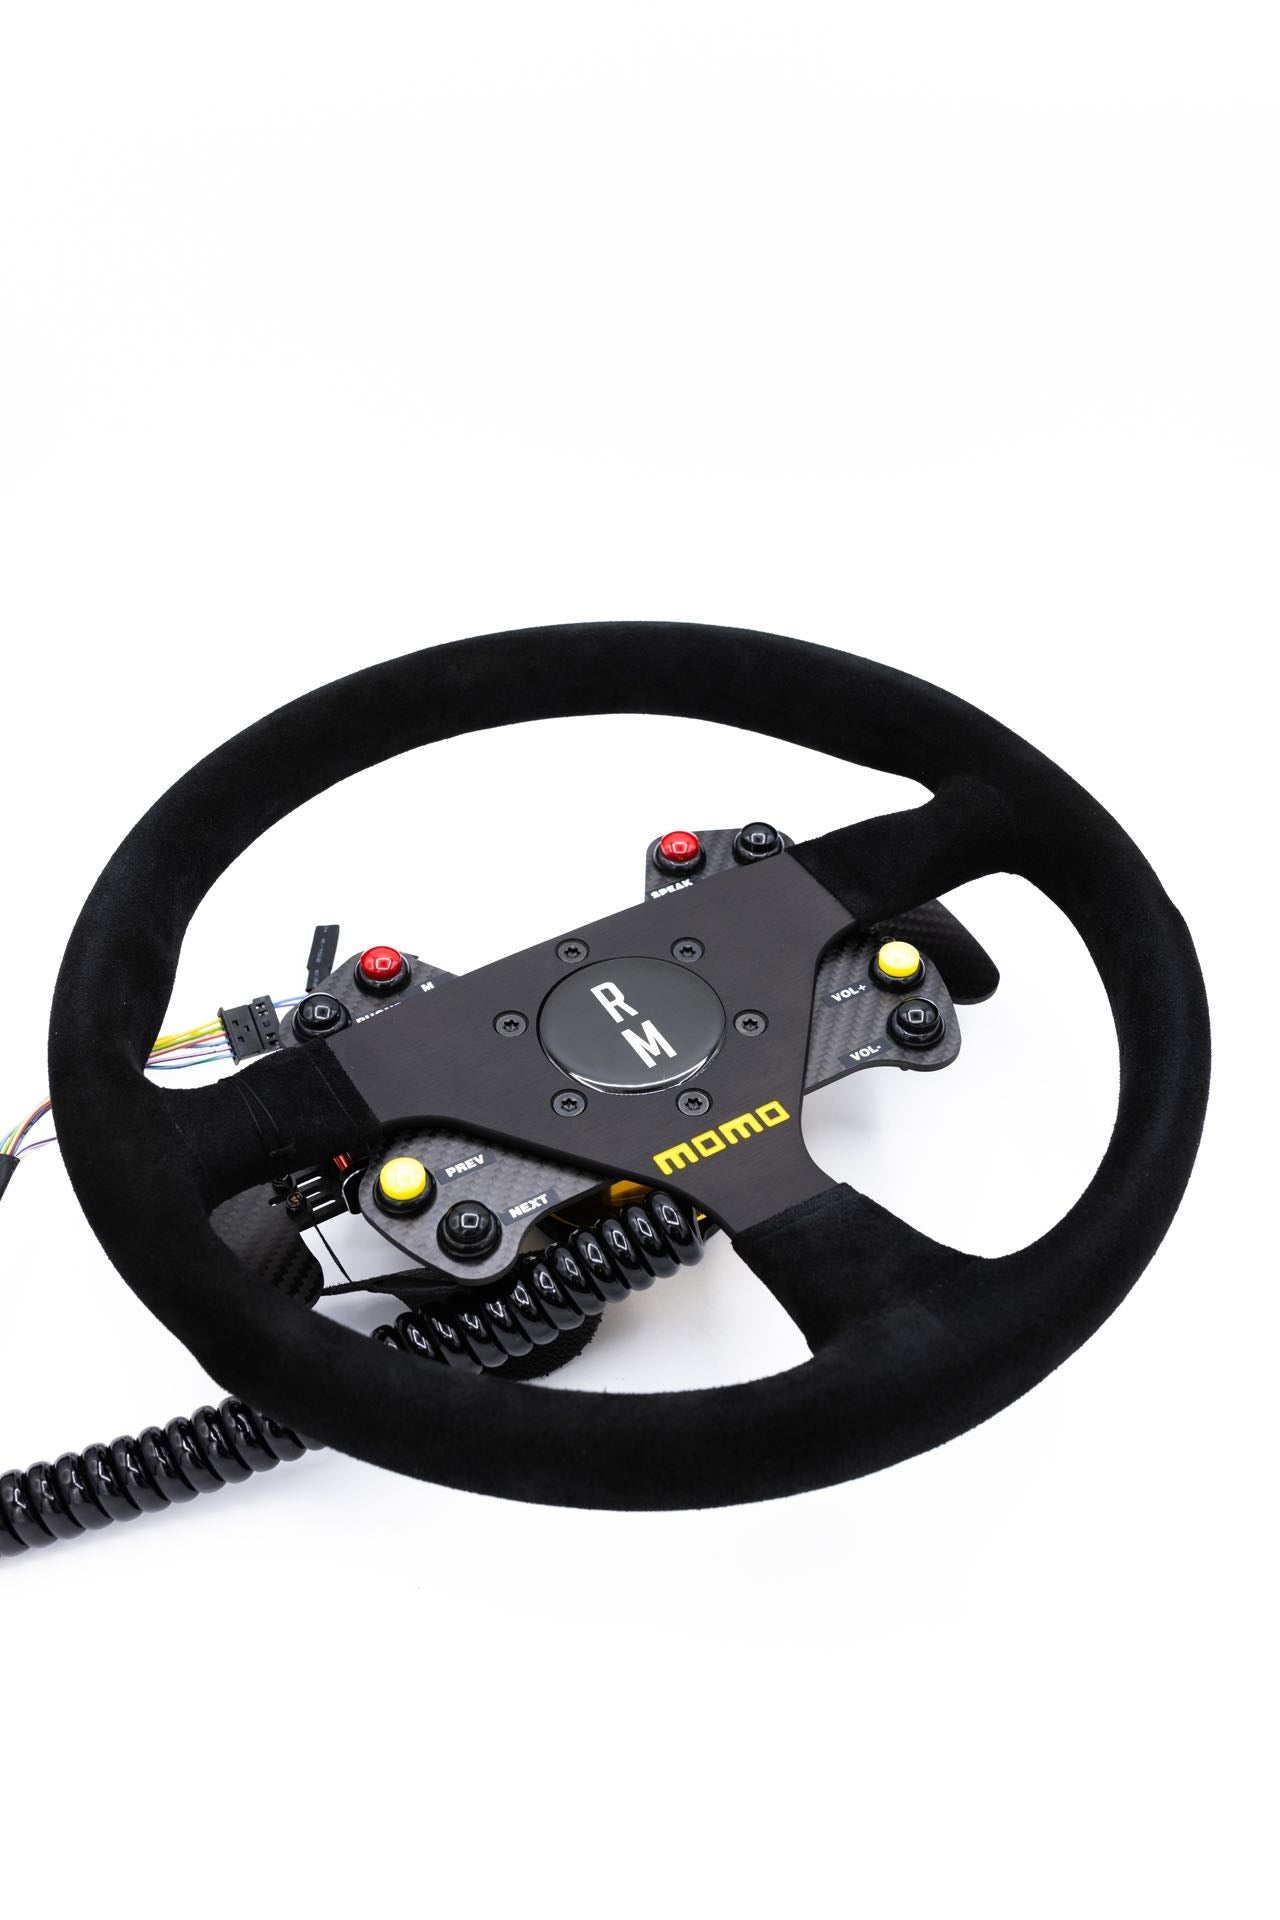 RM Engineering E9X M3 Racing Steering Wheel V2 6MT